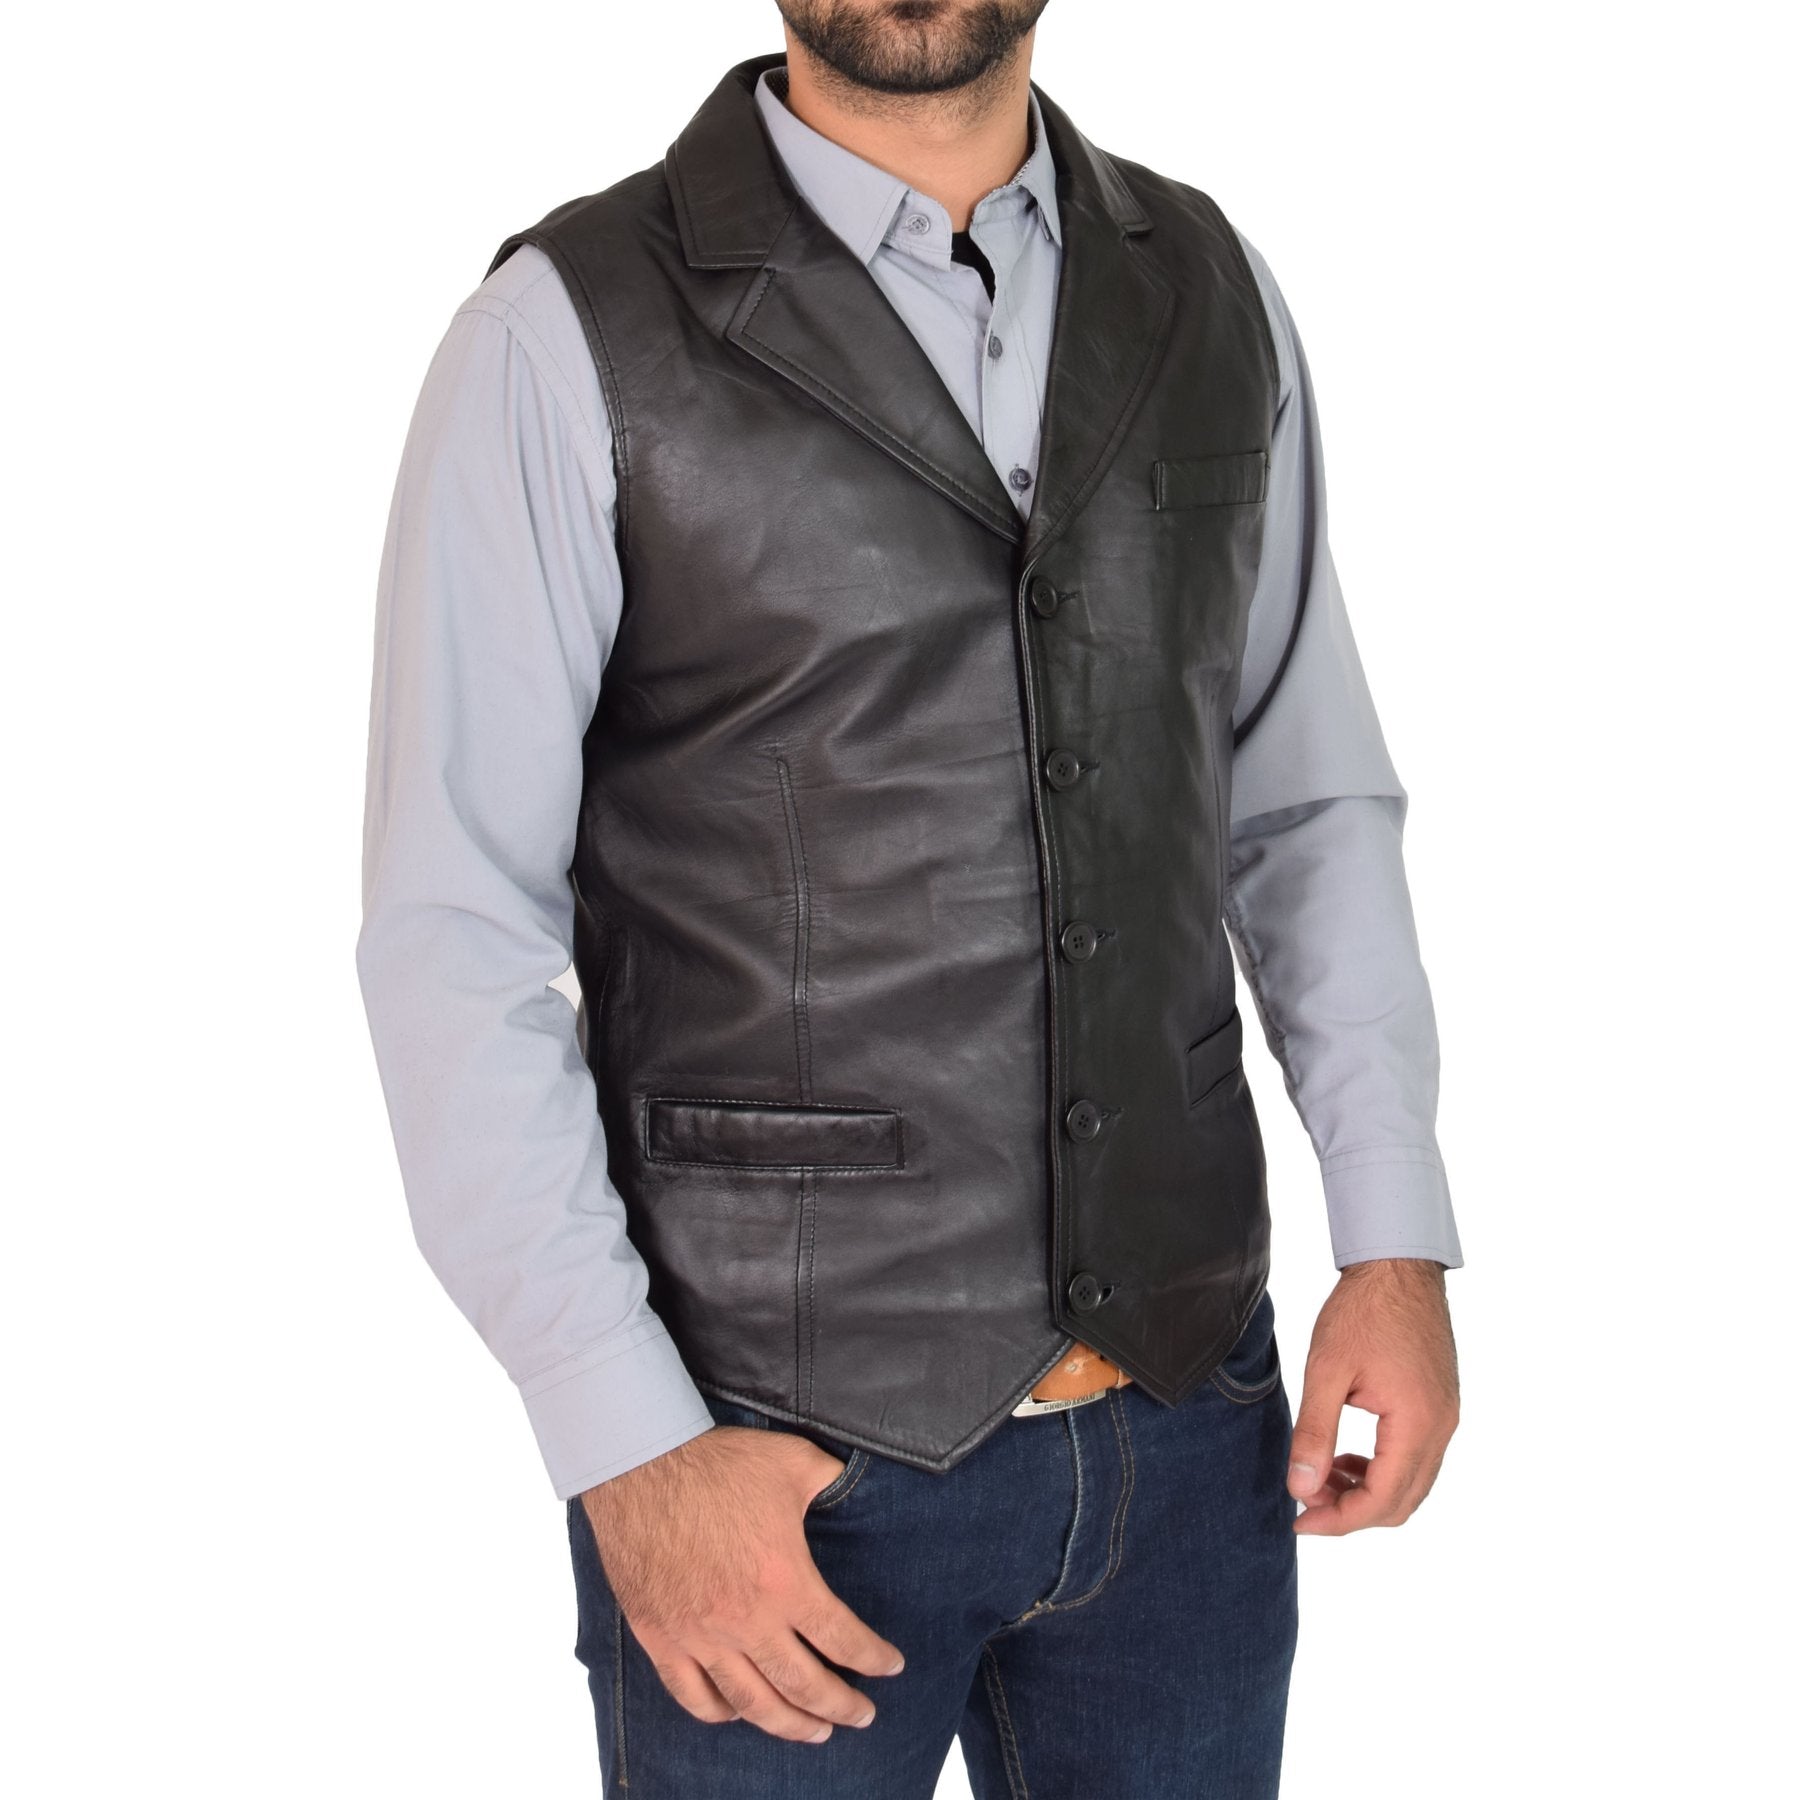 Spine Spark Men's Motorbike Soft Leather Black Classic Style Vest